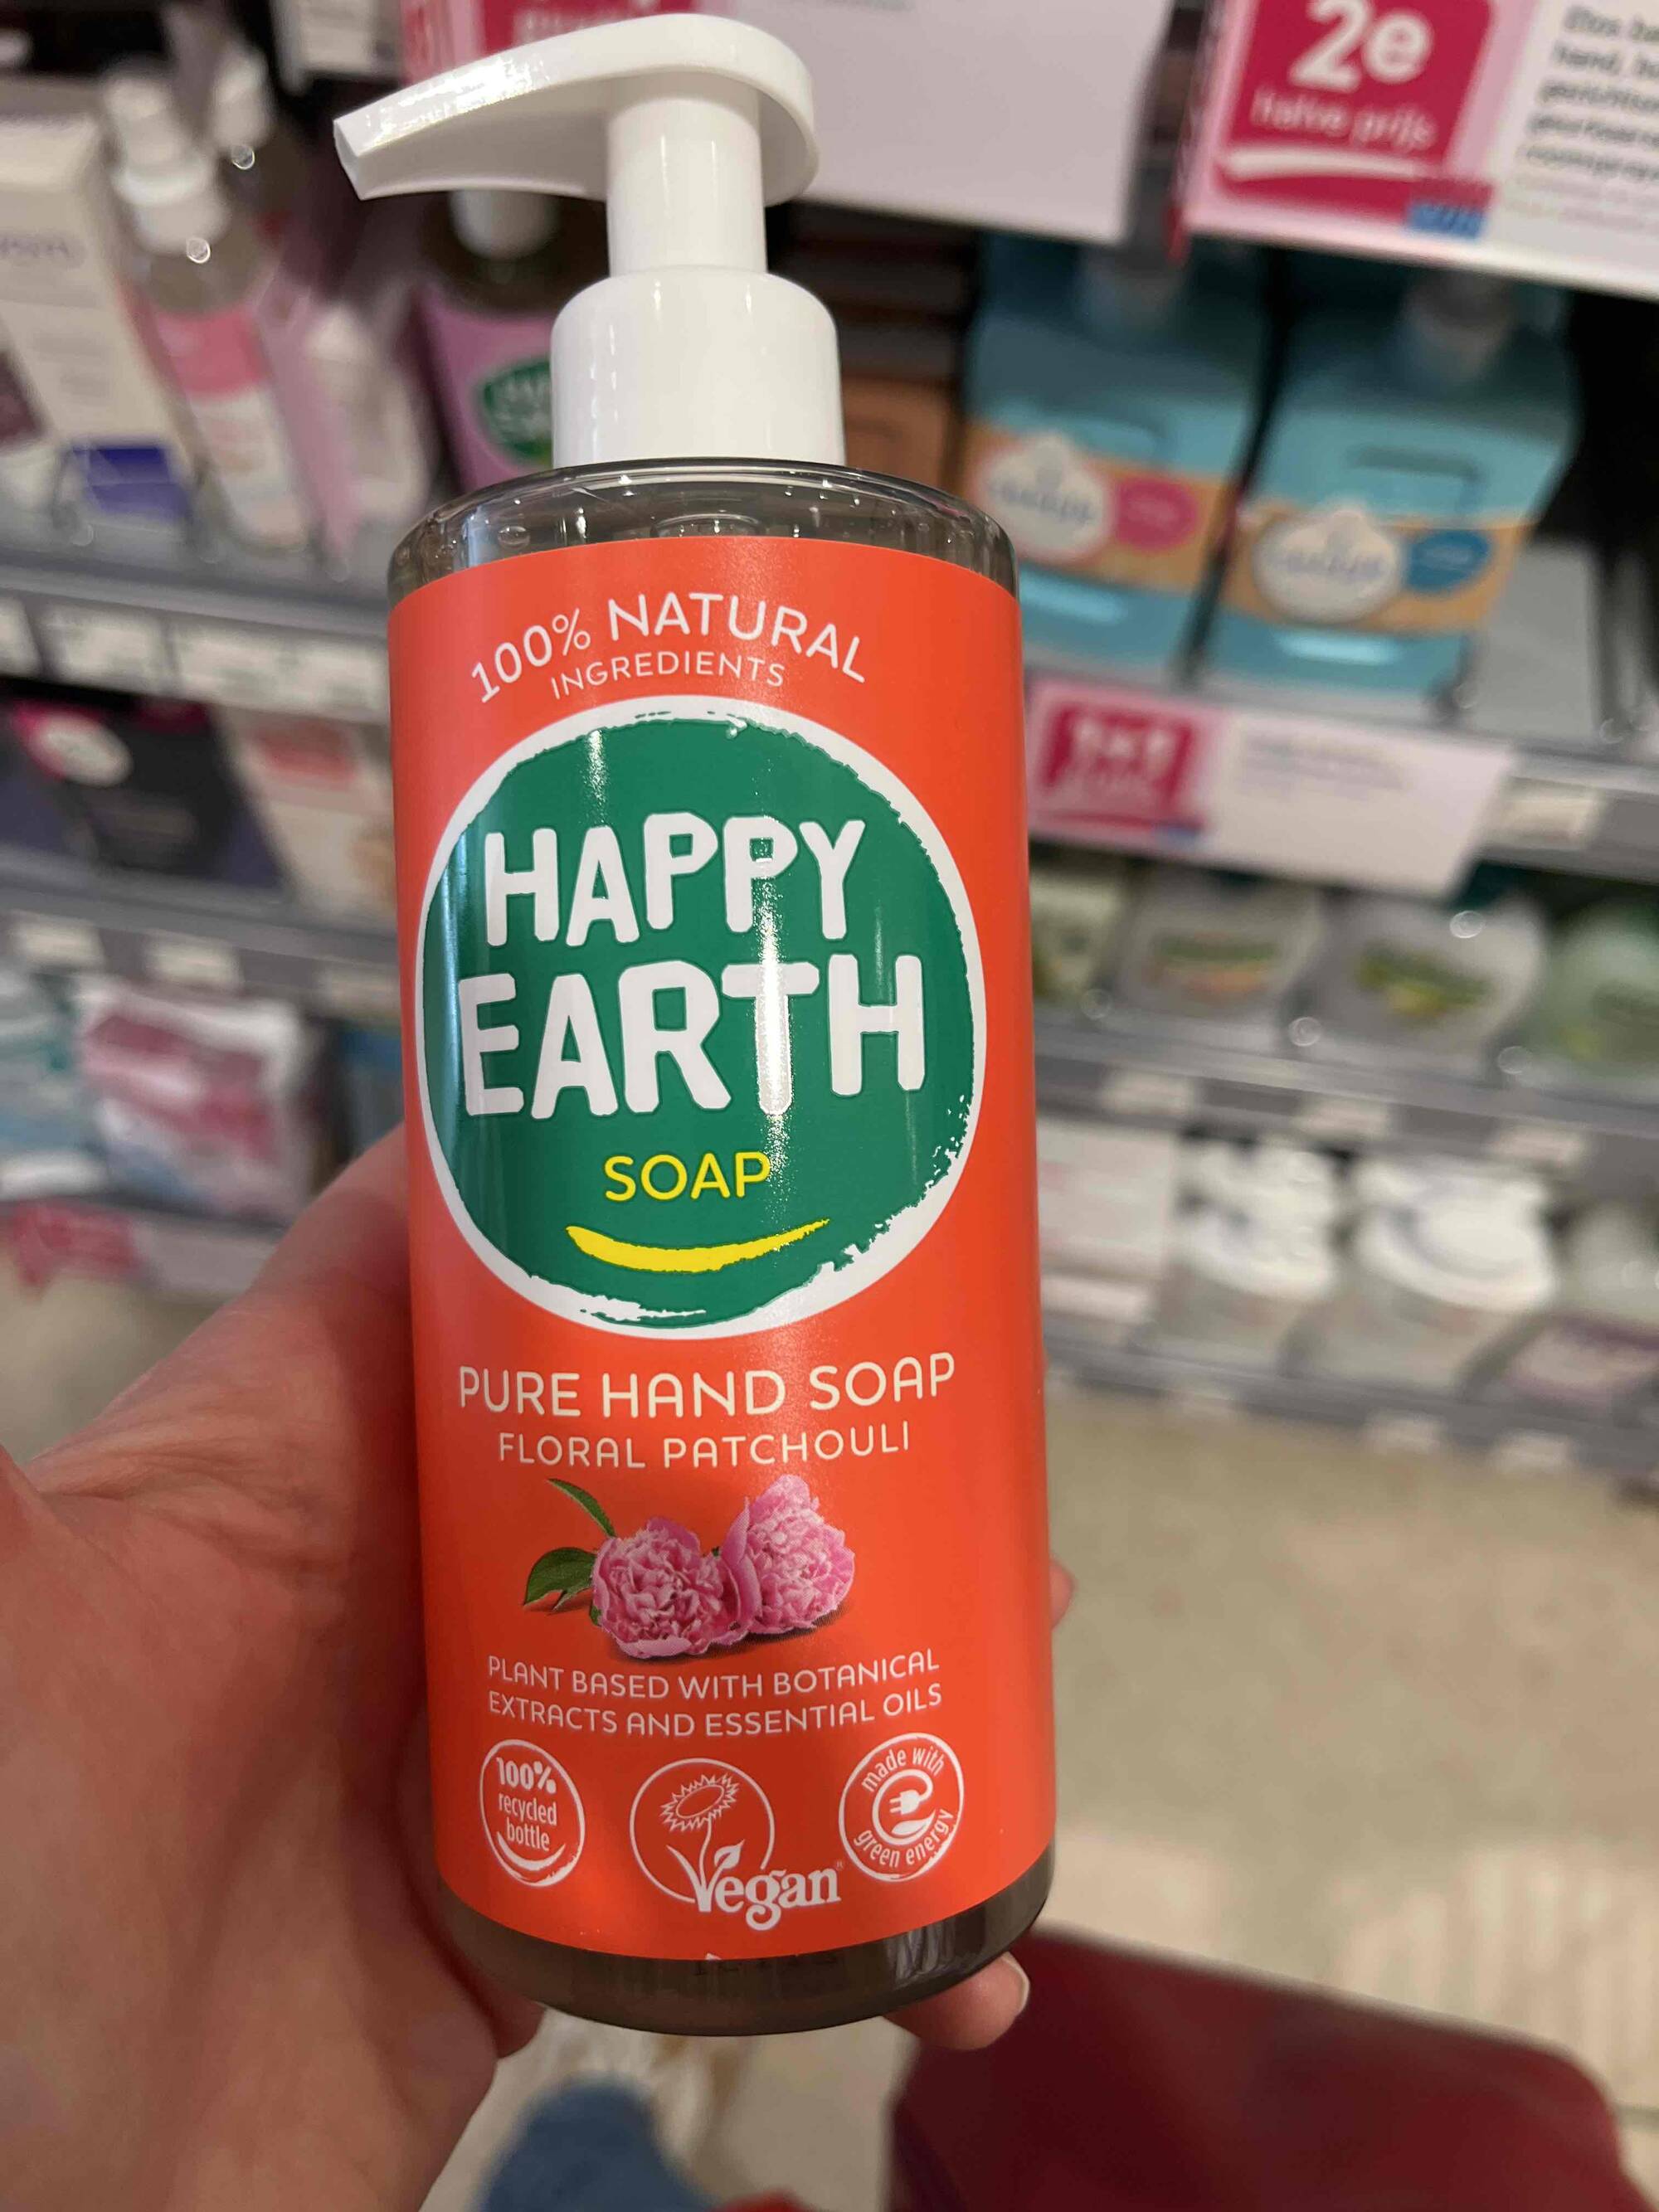 HAPPY EARTH - Soap floral patchouli